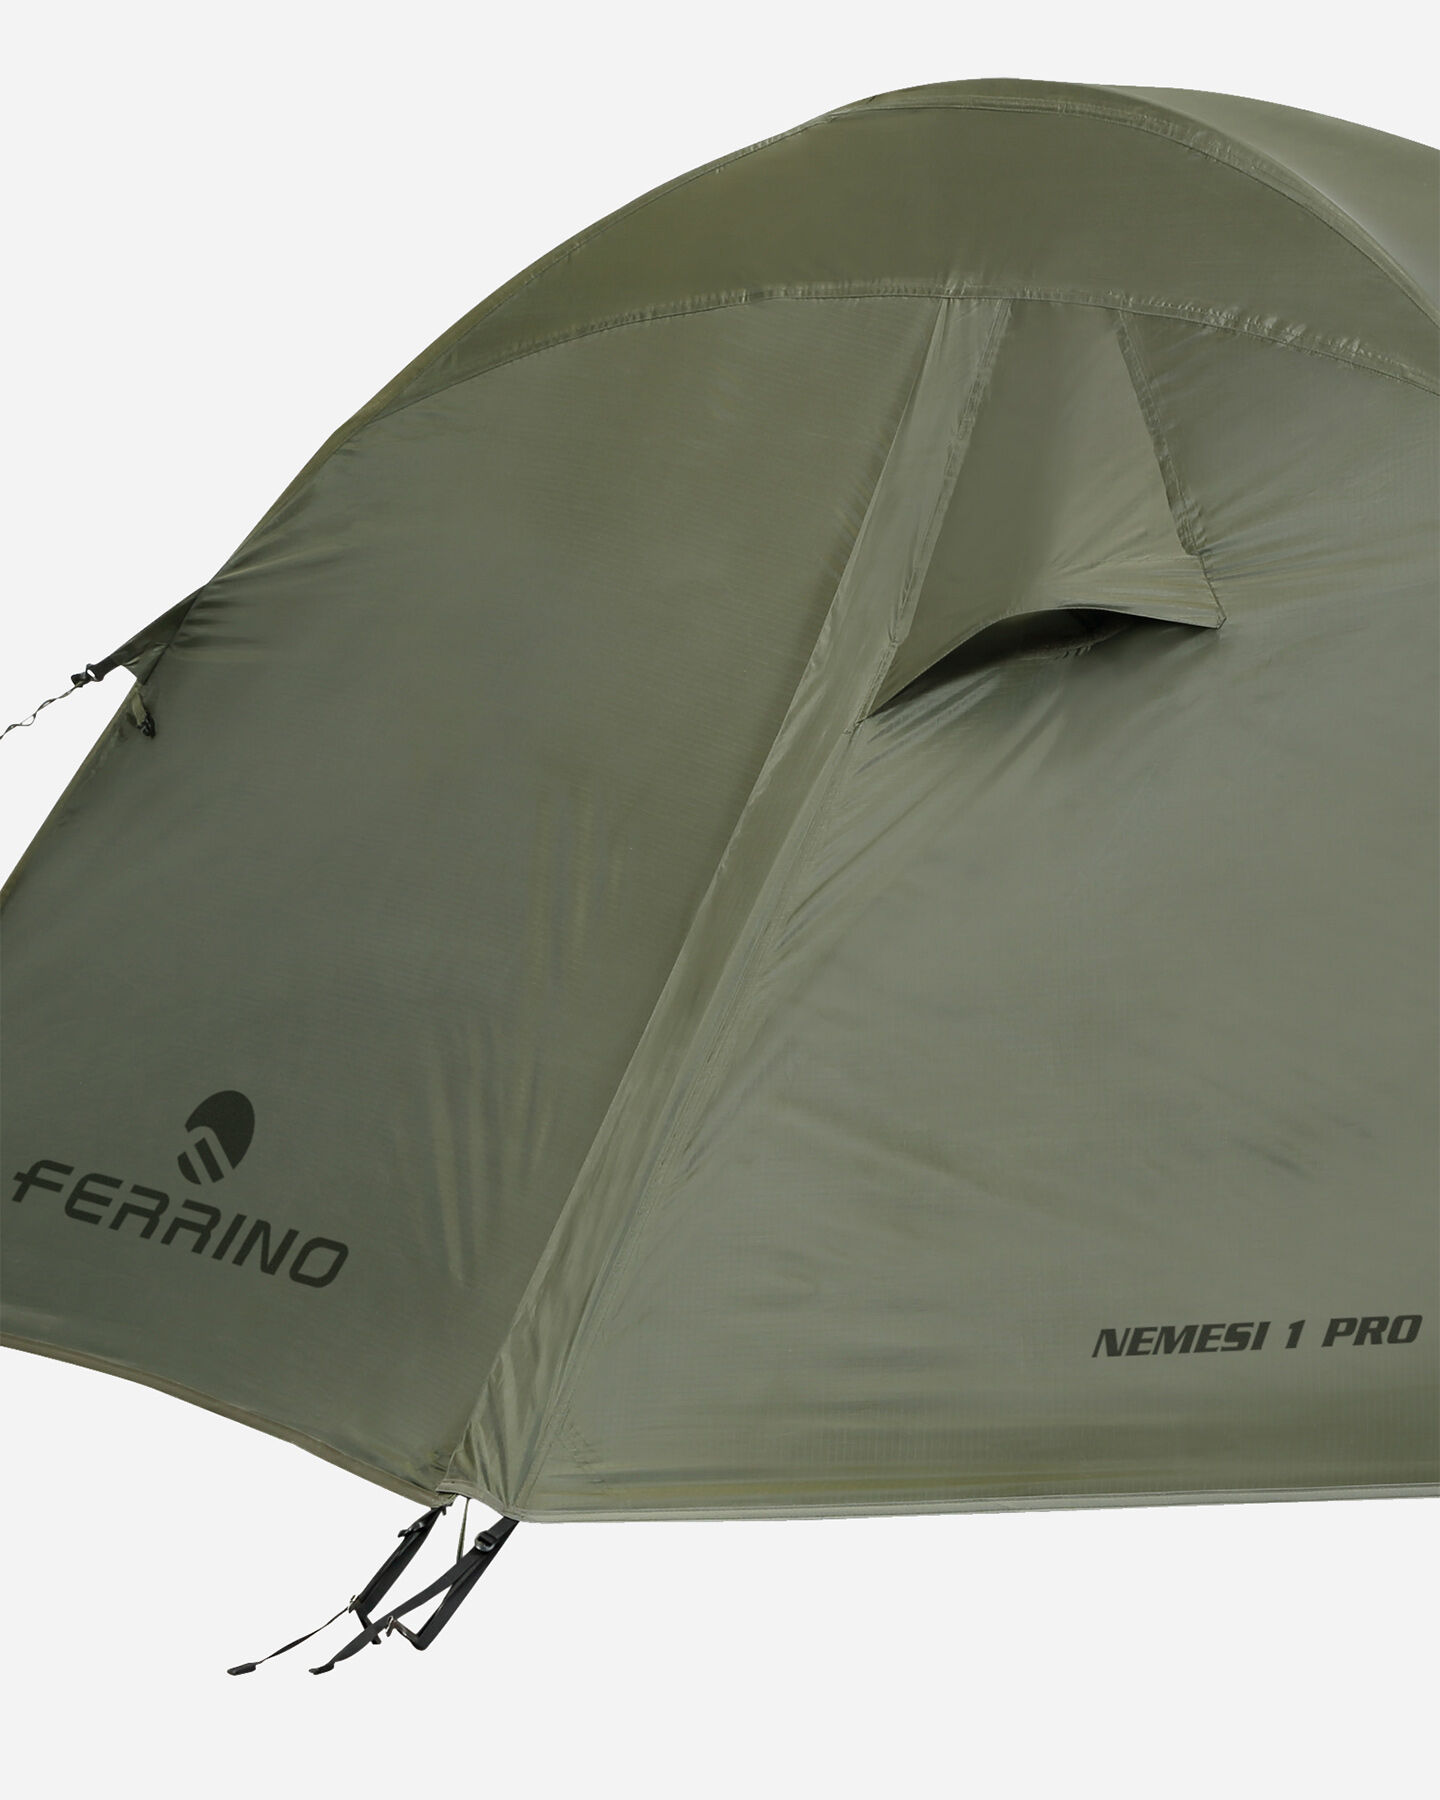  Tenda FERRINO NEMESI 1 PRO FR  S4108166|MOOFR|UNI scatto 1